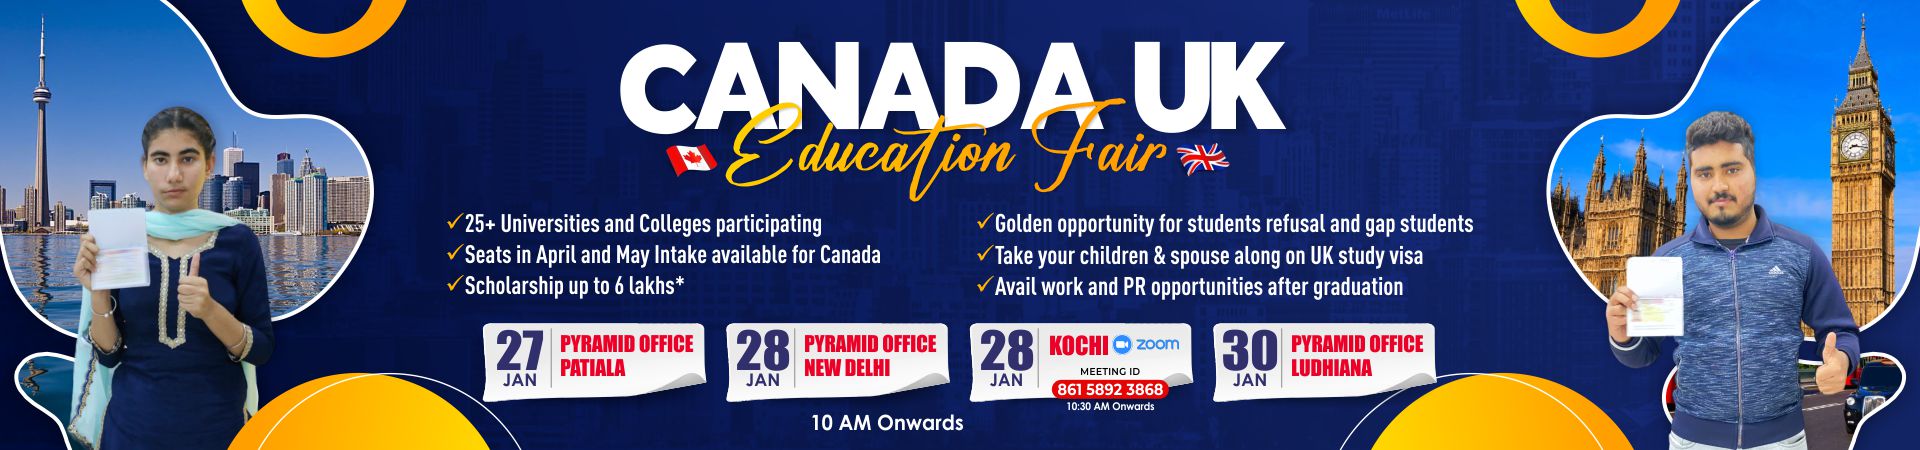 Canada Education Fair